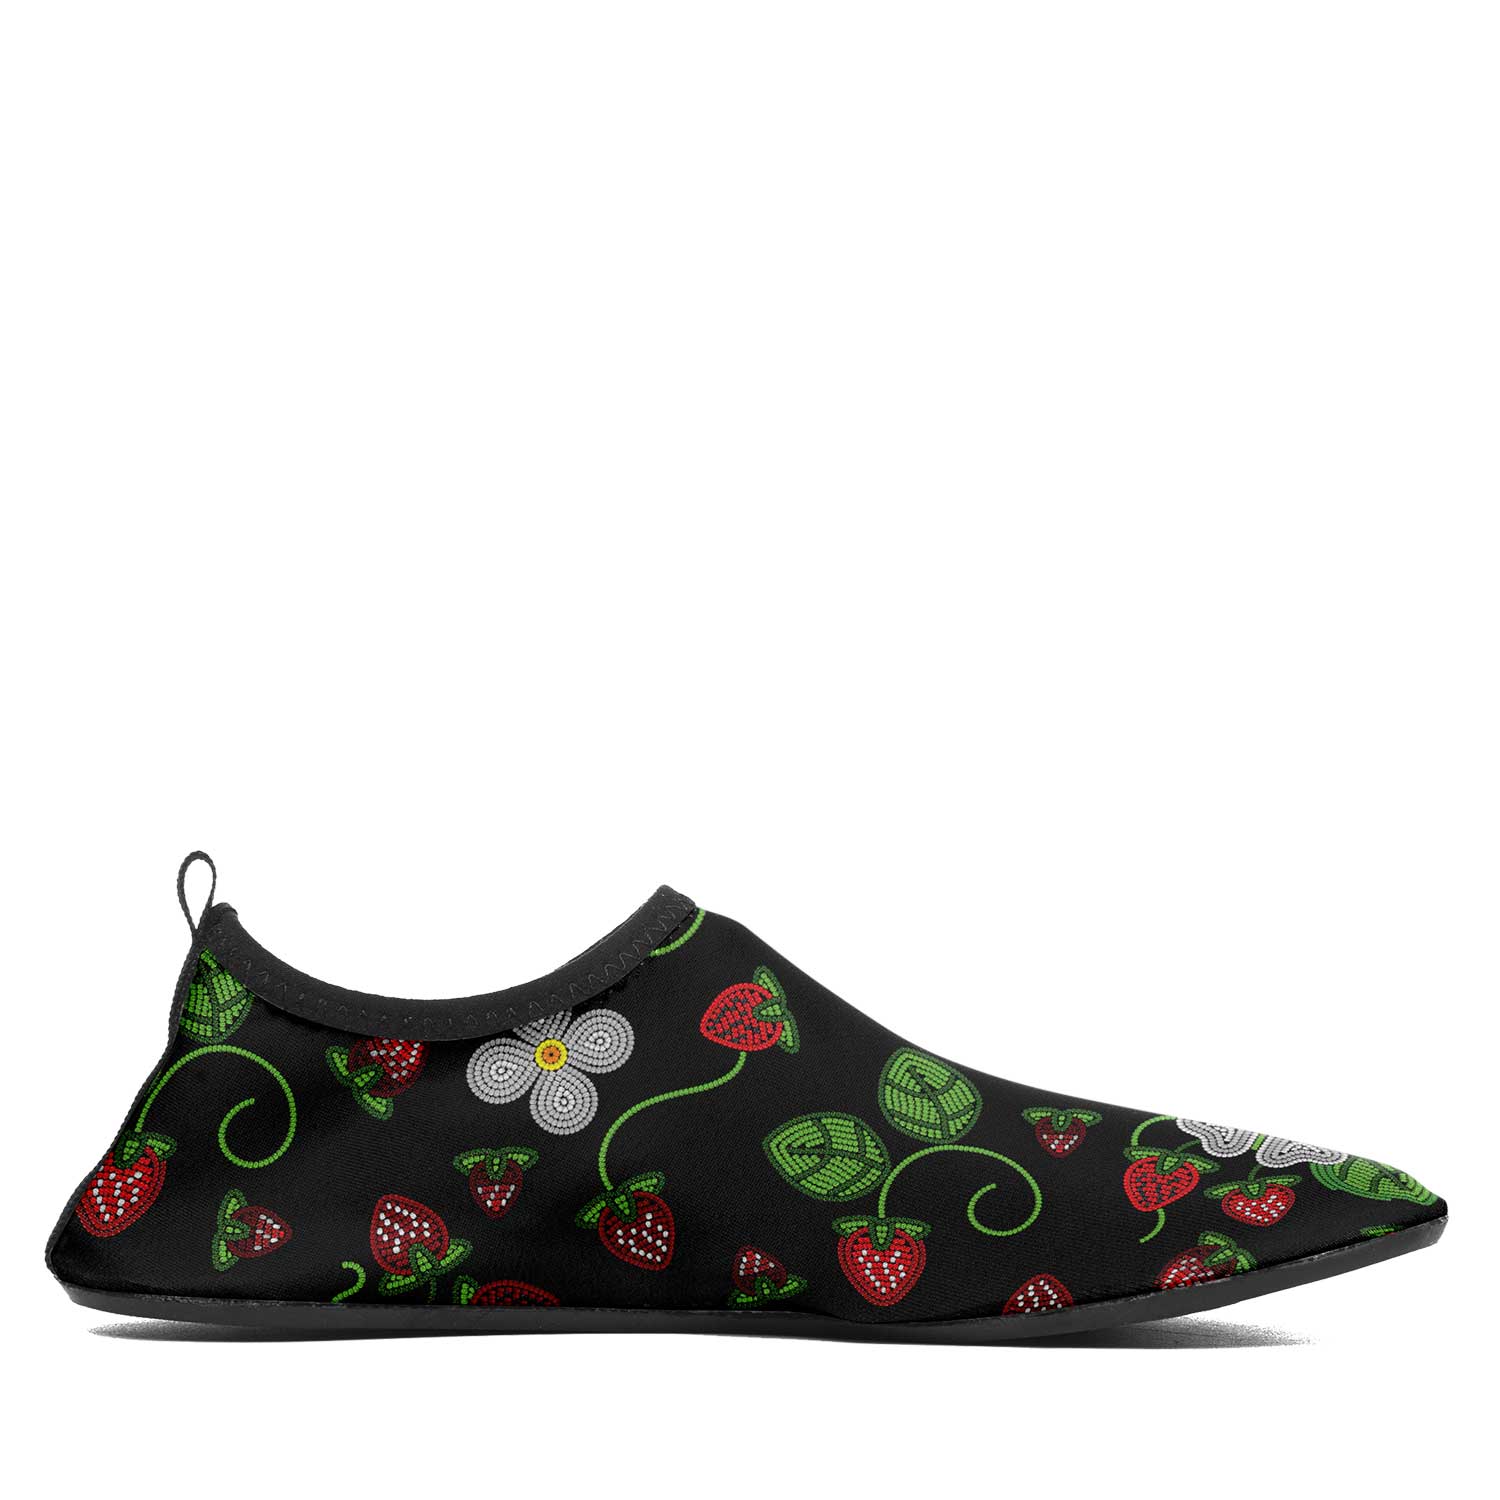 Strawberry Dreams Midnight Kid's Sockamoccs Slip On Shoes